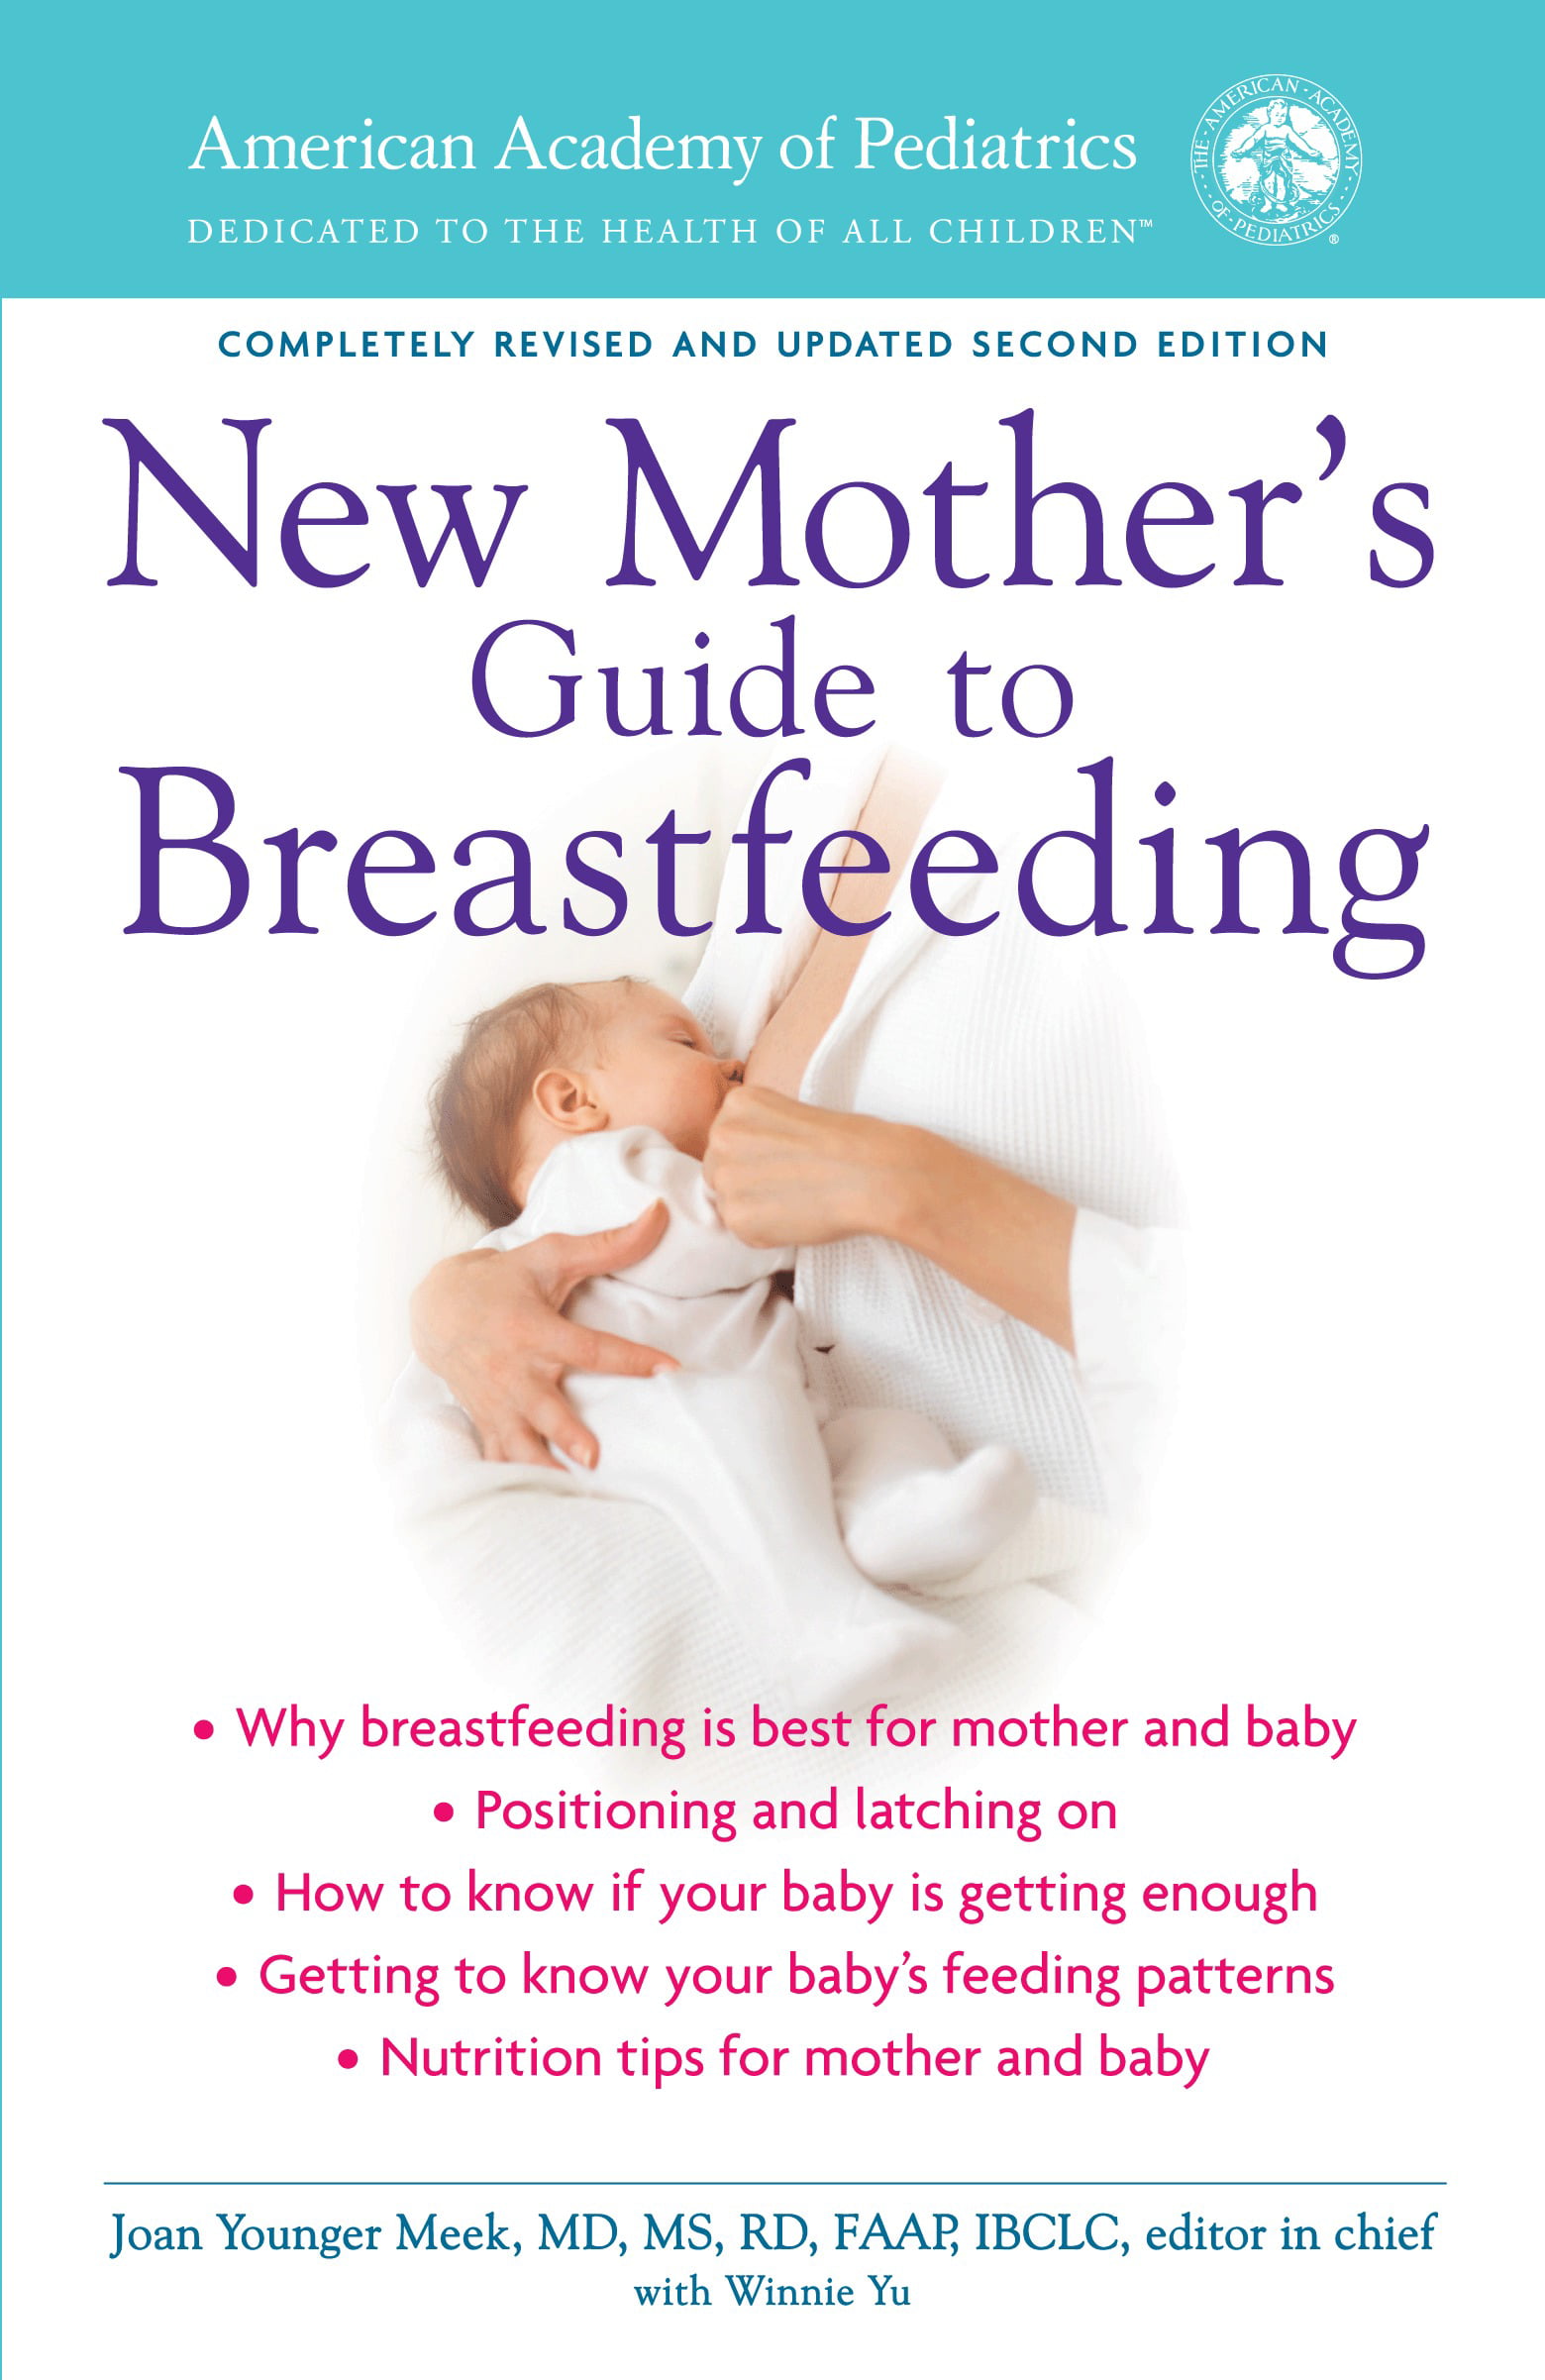 Mynn's Top 10 Breastfeeding Essentials for the Traveler Mum - She Walks the  World